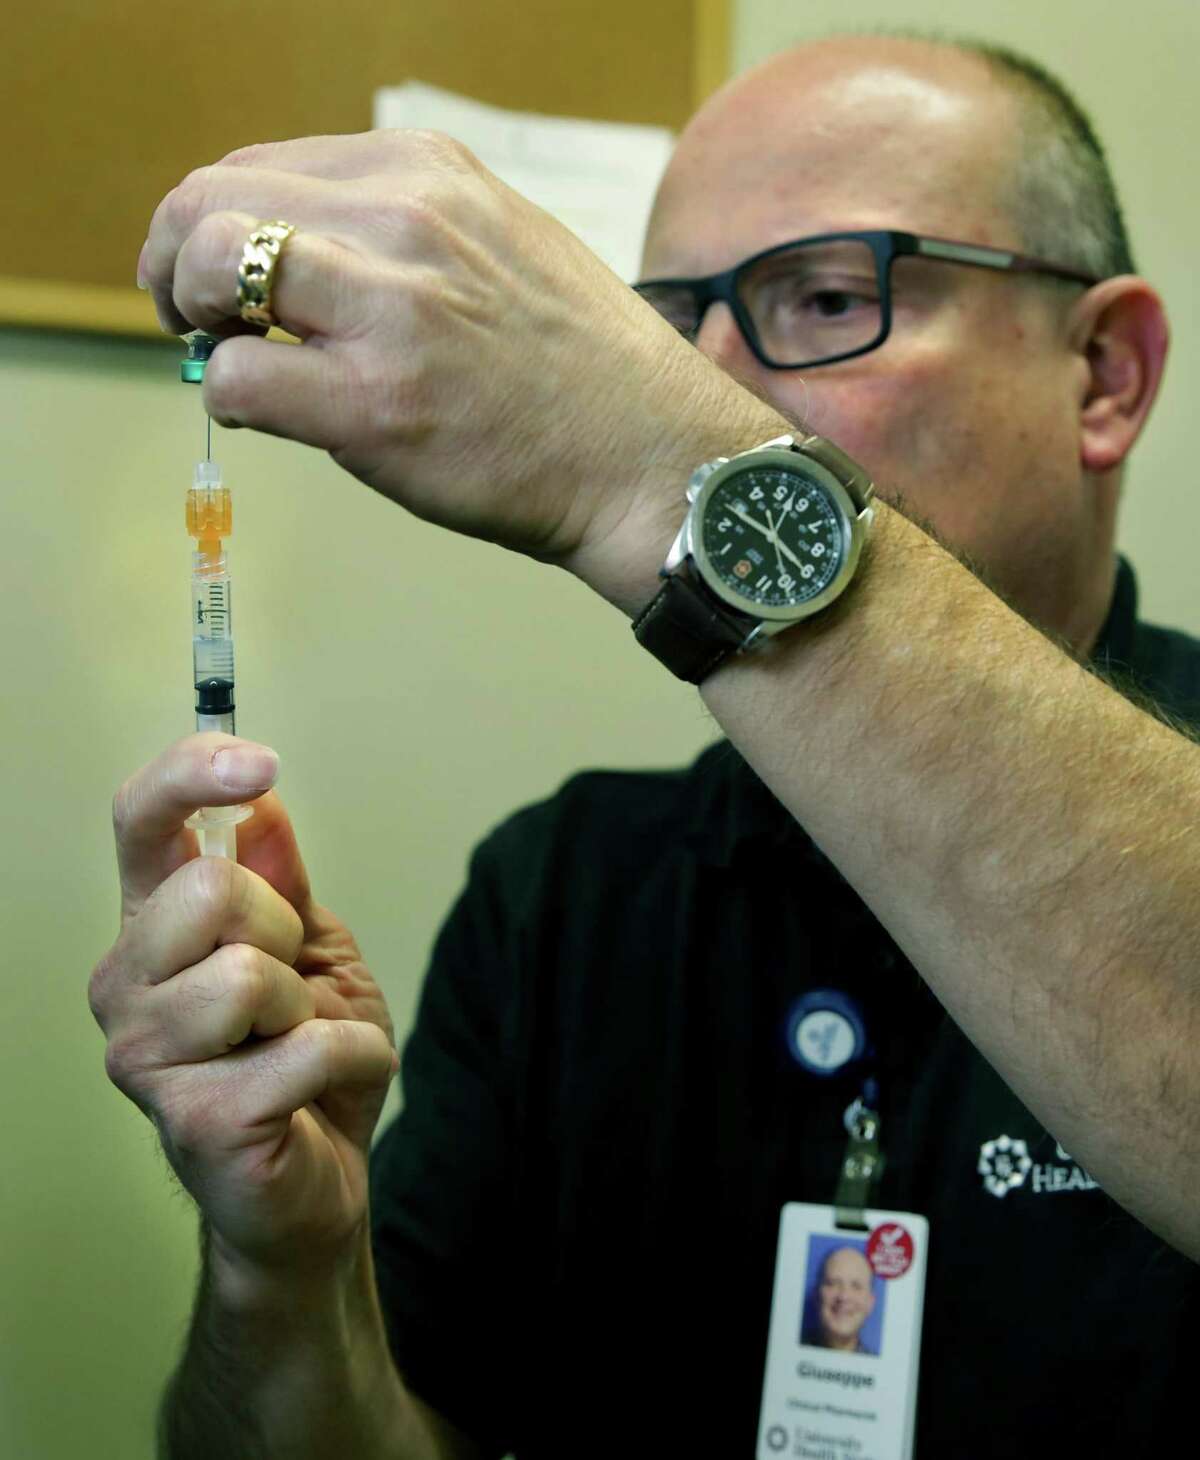 Amid national shortage, shingles vaccine scarce in San Antonio